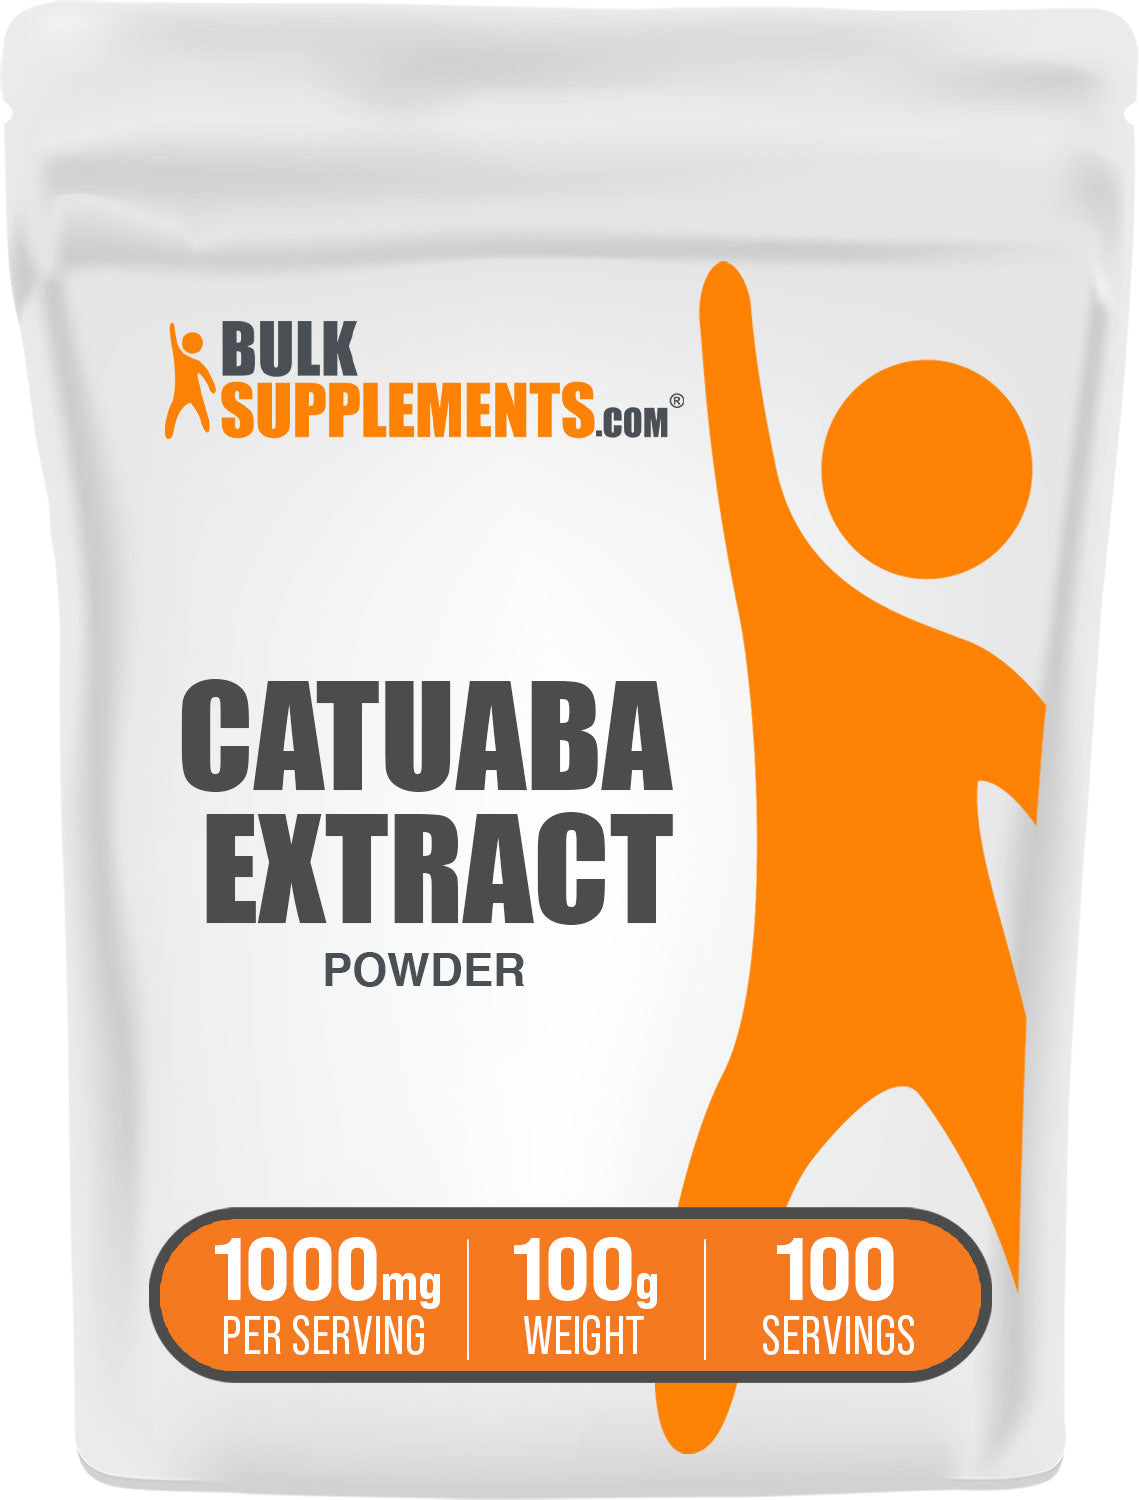 100g of Catuaba Extract